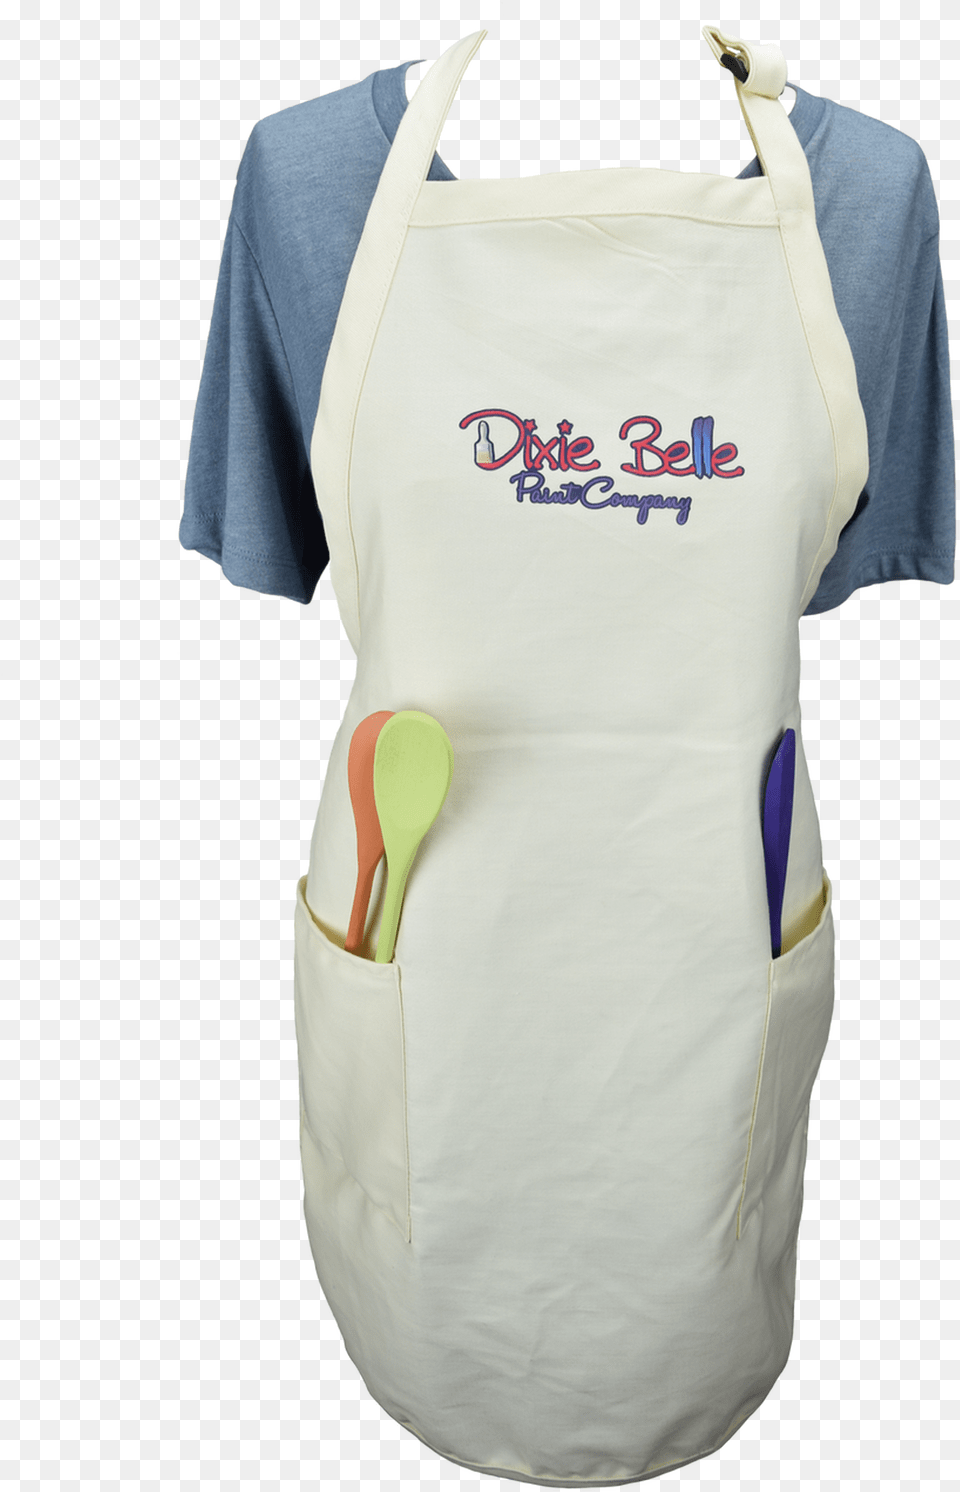 Dixie Belle Paint Company Apron, Clothing, Accessories, Bag, Handbag Png Image